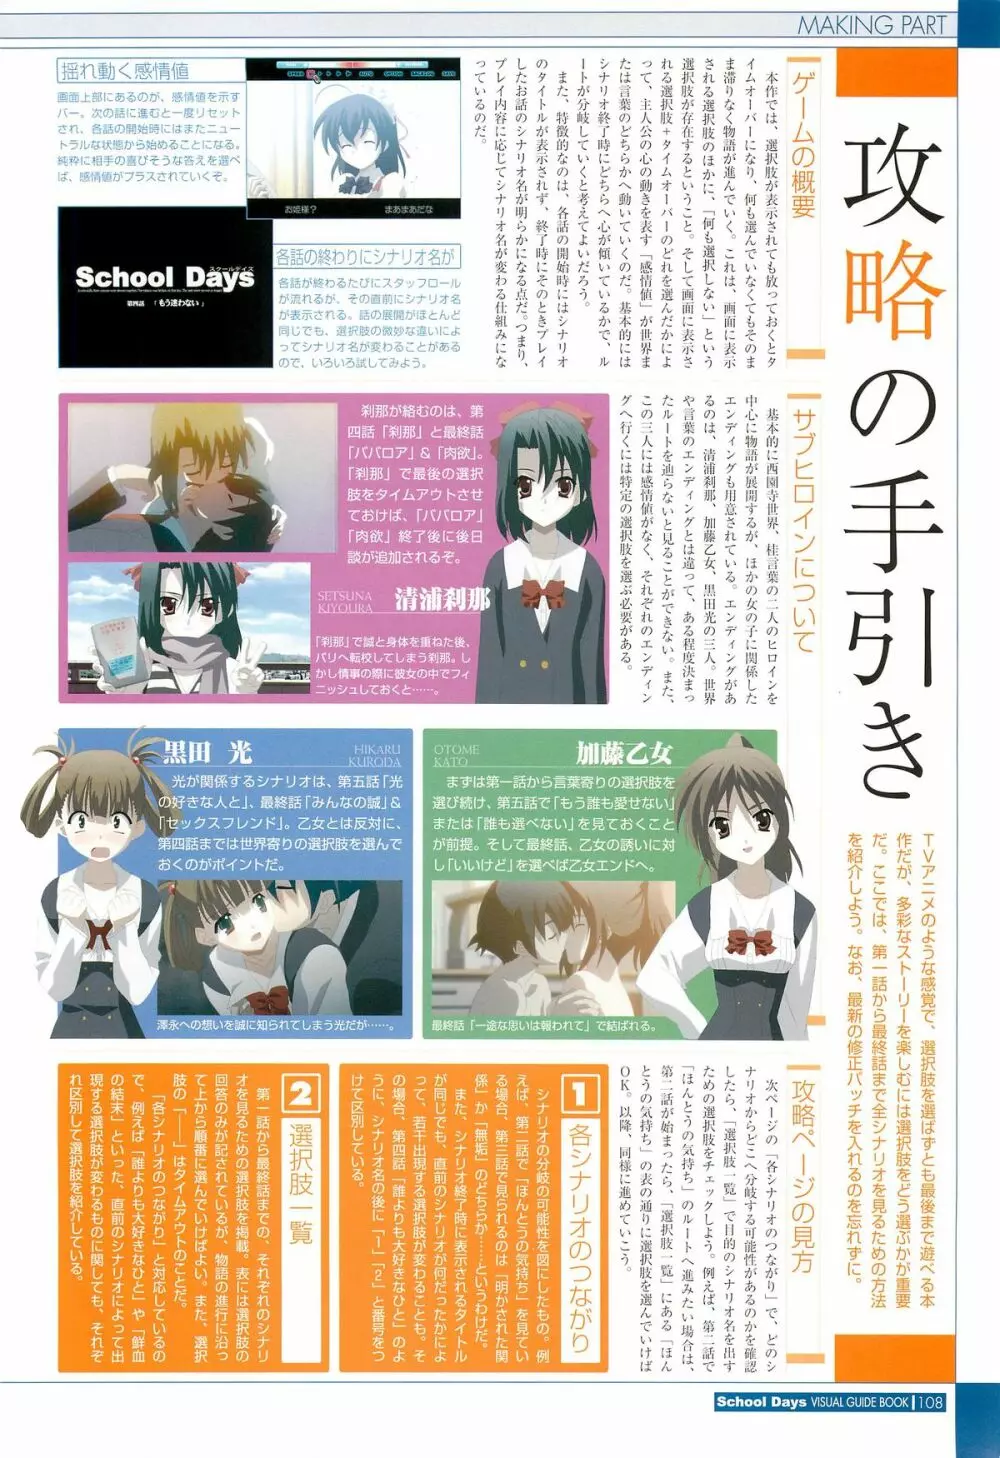 School Days ビジュアル・ガイドブック 110ページ